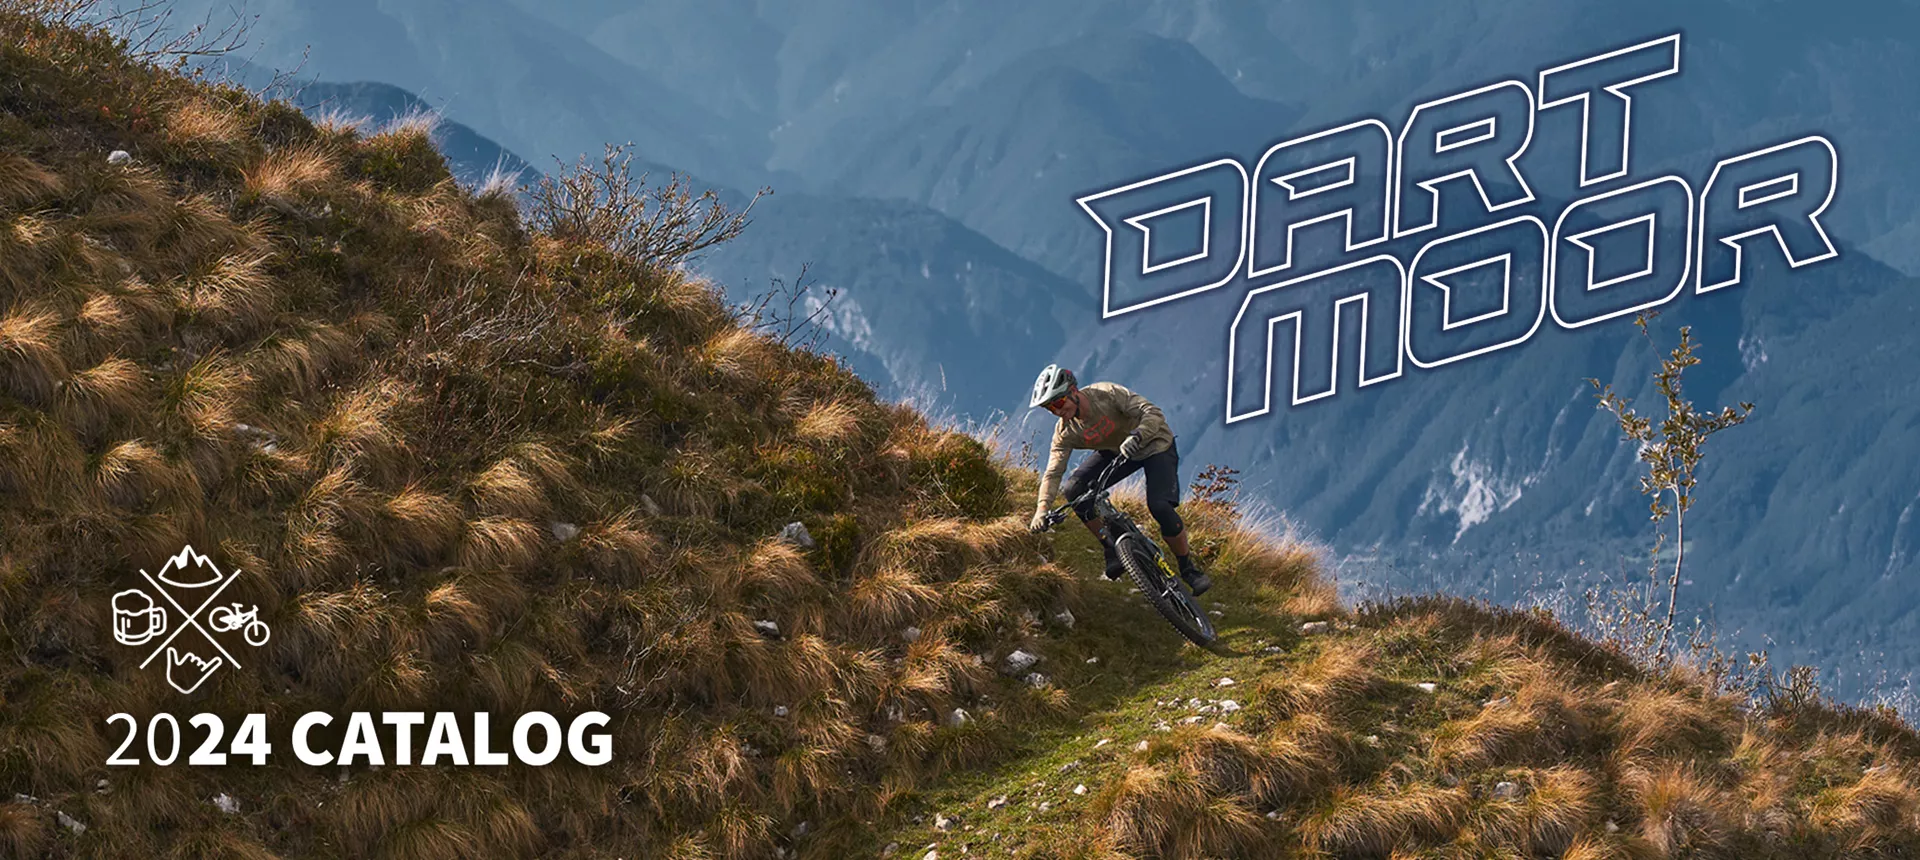 Dartmoor-Bikes Catalog 2024_banner